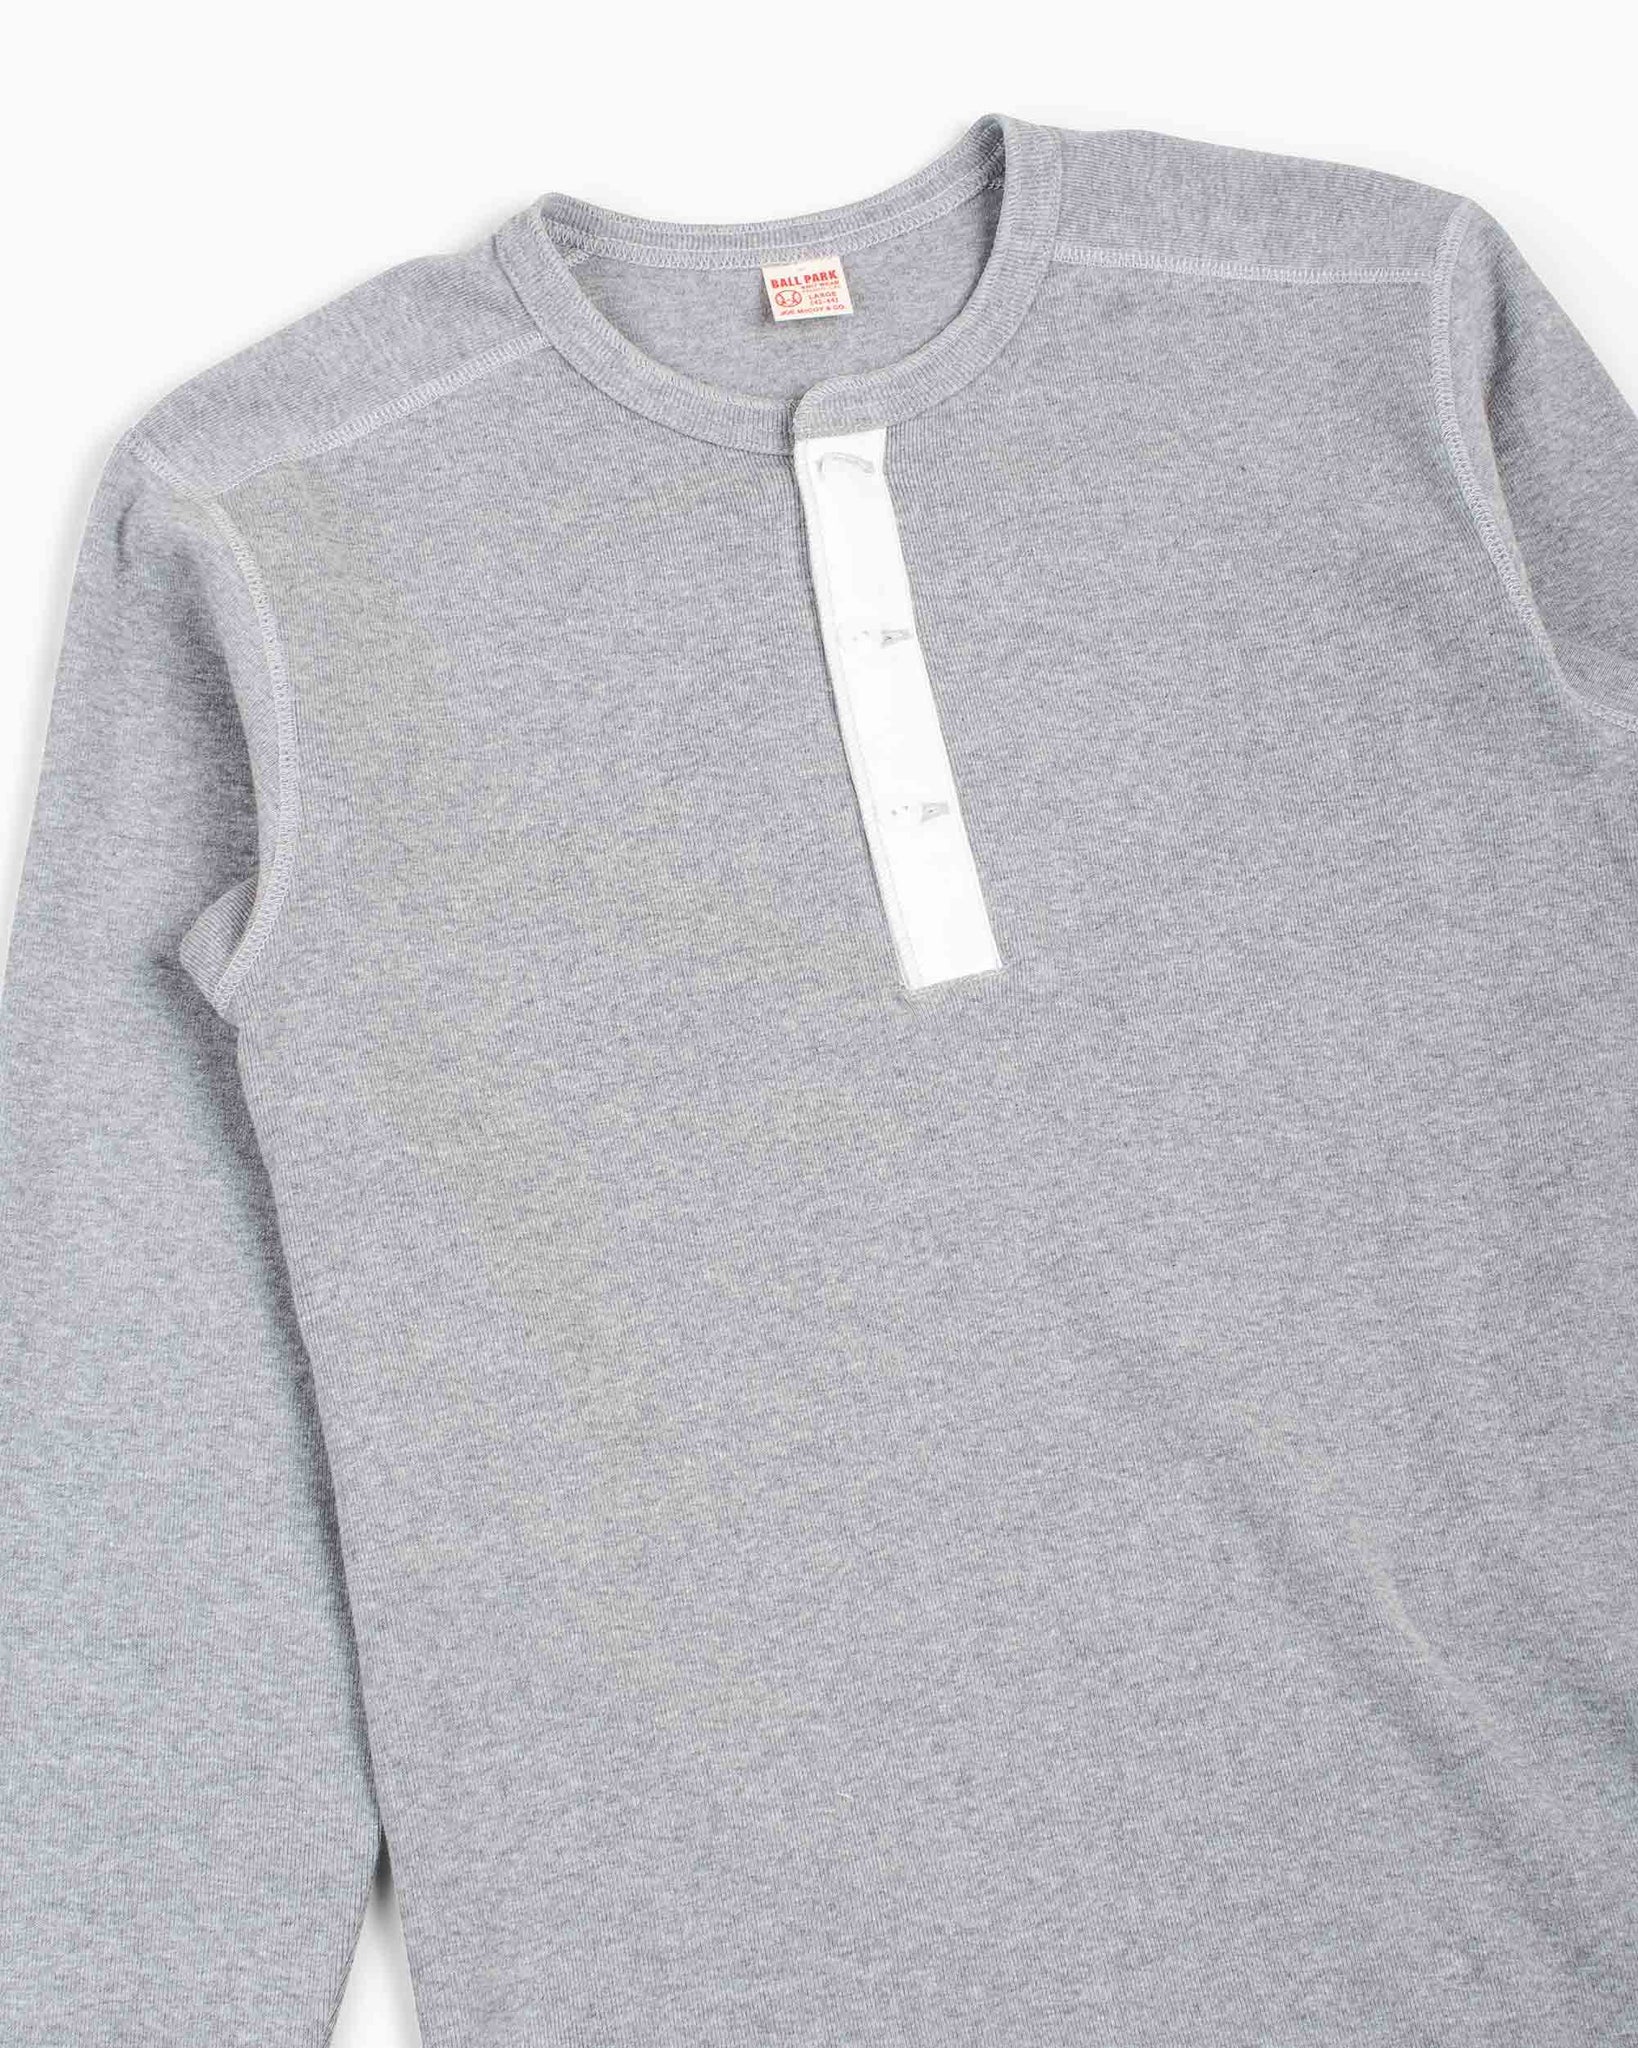 The Real McCoy's MC16117 Union Shirt Long Sleeve Grey Details